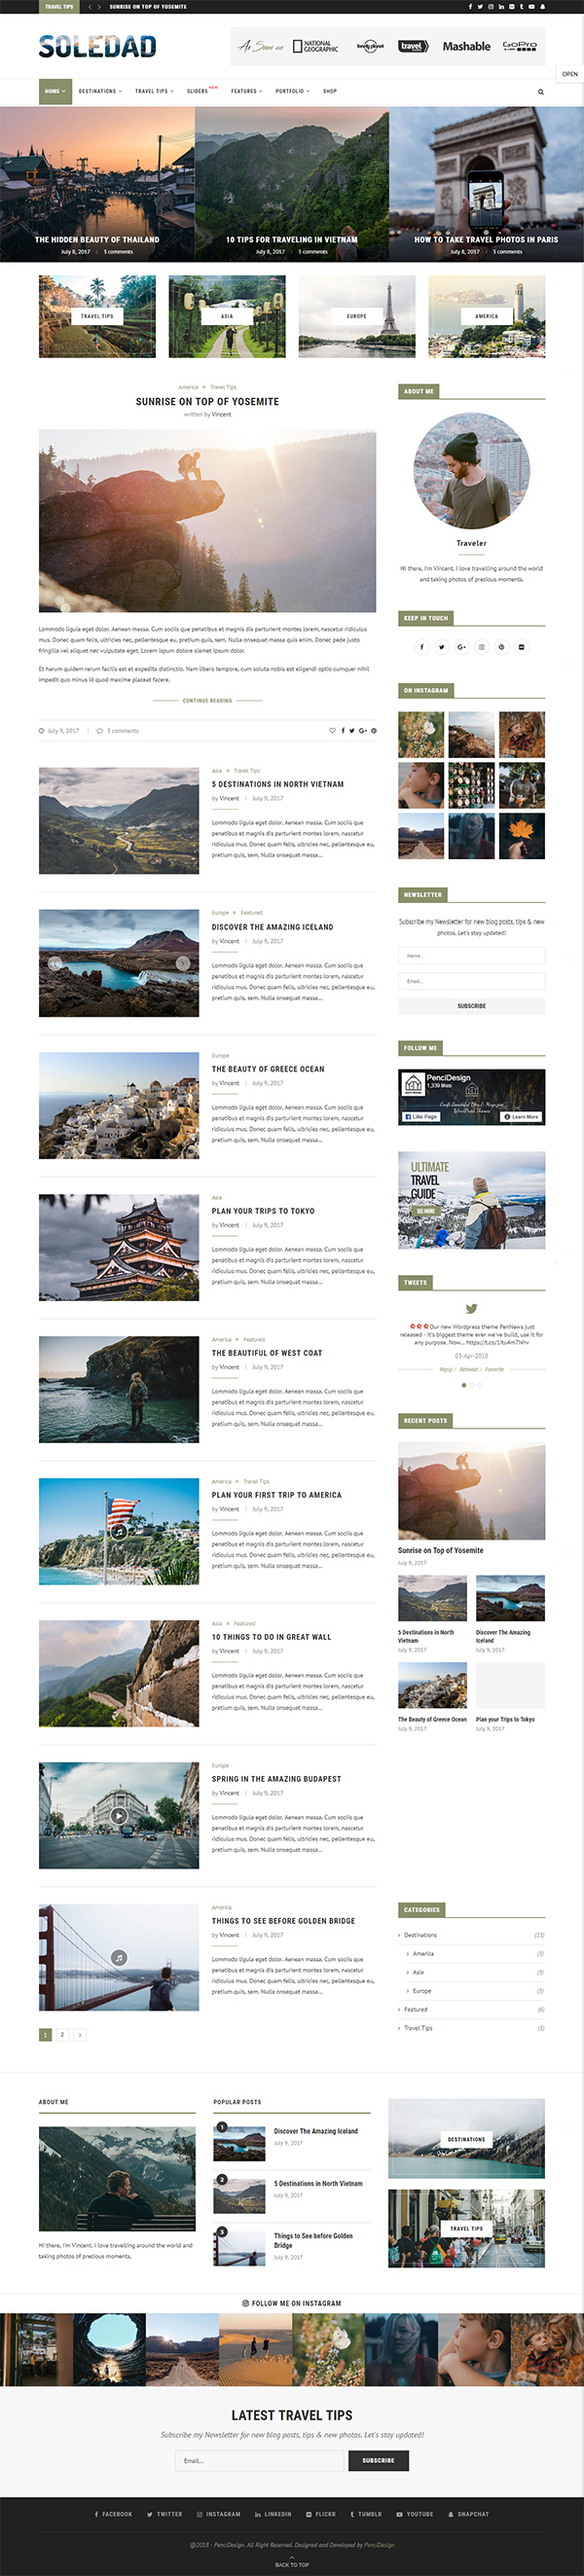 Soledad - Multi-Concept Blog/Magazine/News AMP WordPress Theme